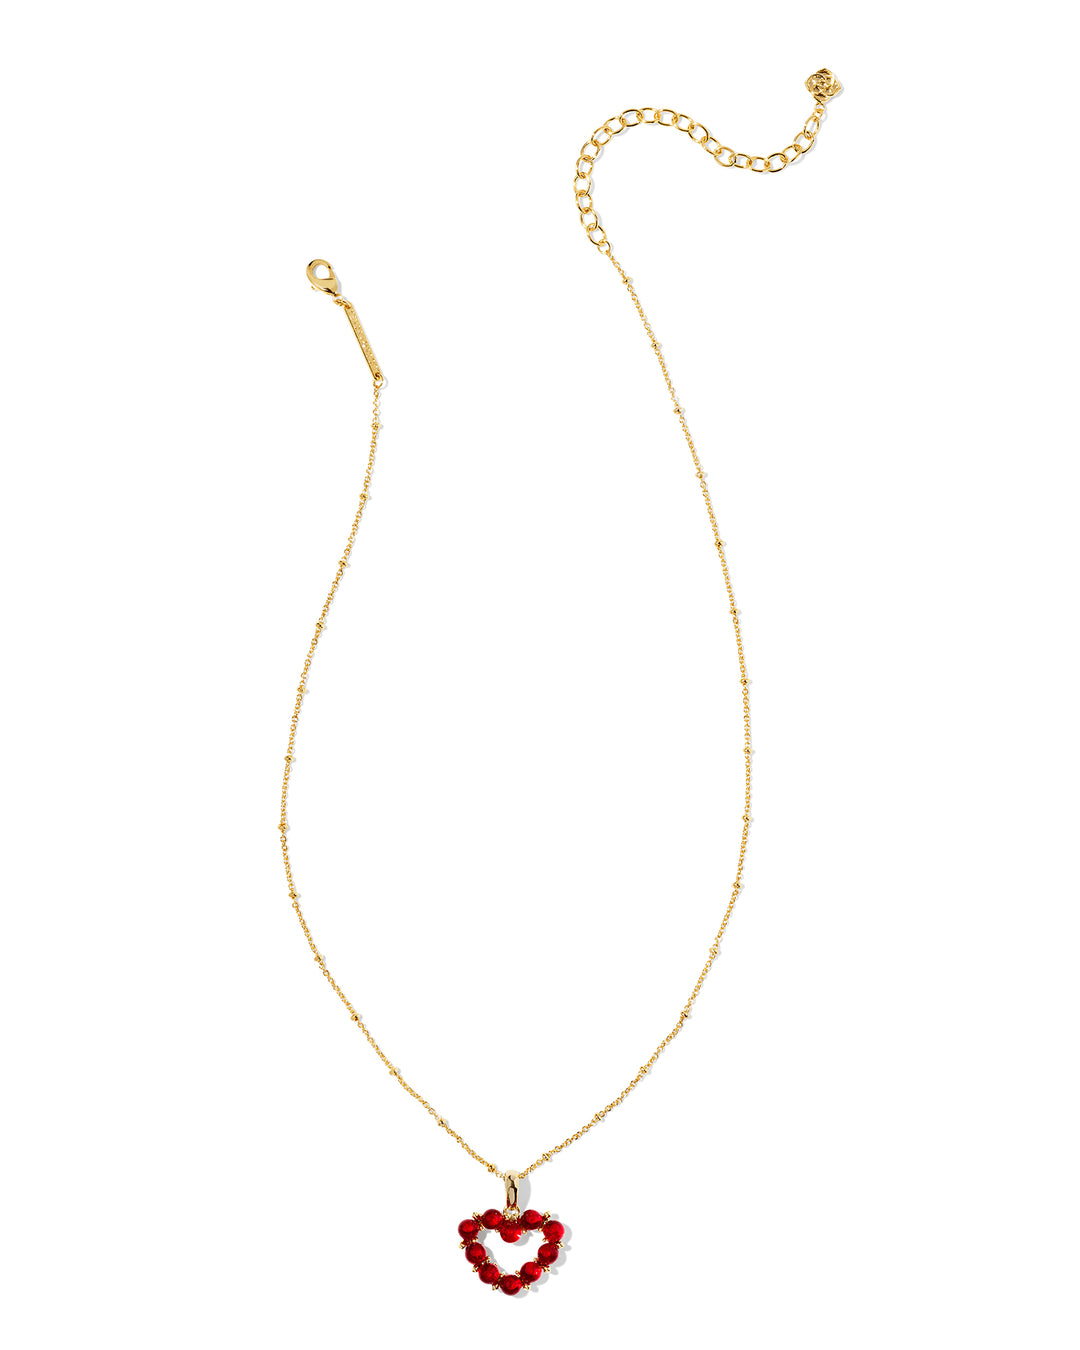 Kendra Scott-Ashton Gold Heart Short Pendant Necklace in Red Glass